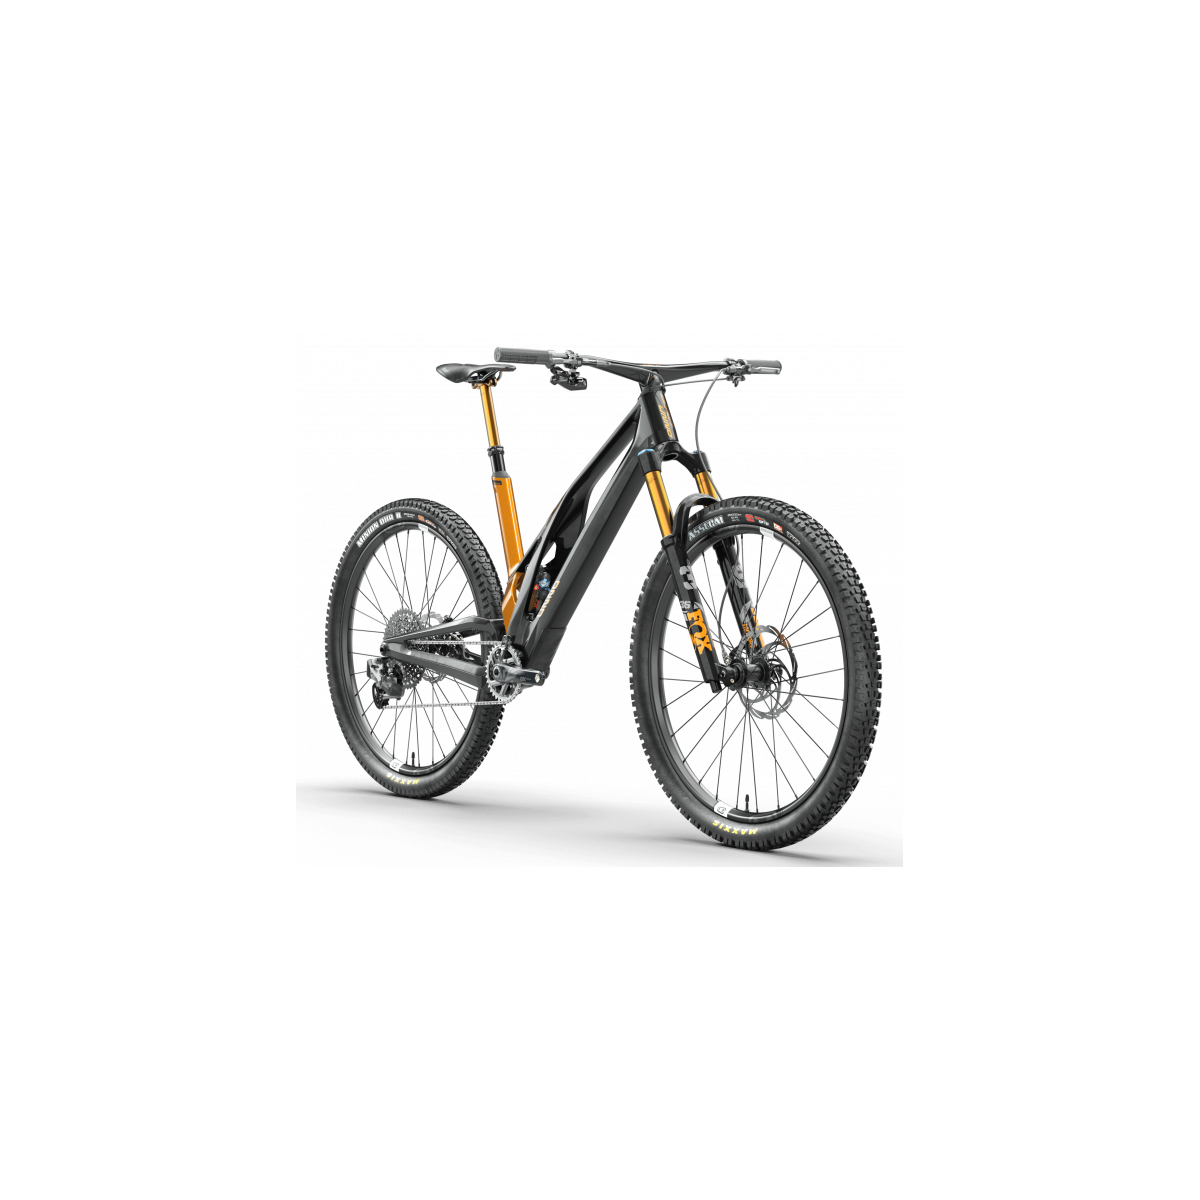 Bicicleta de all mountain / trail Unno Dash Race 150/120mm 29" con cuadro de carbono.